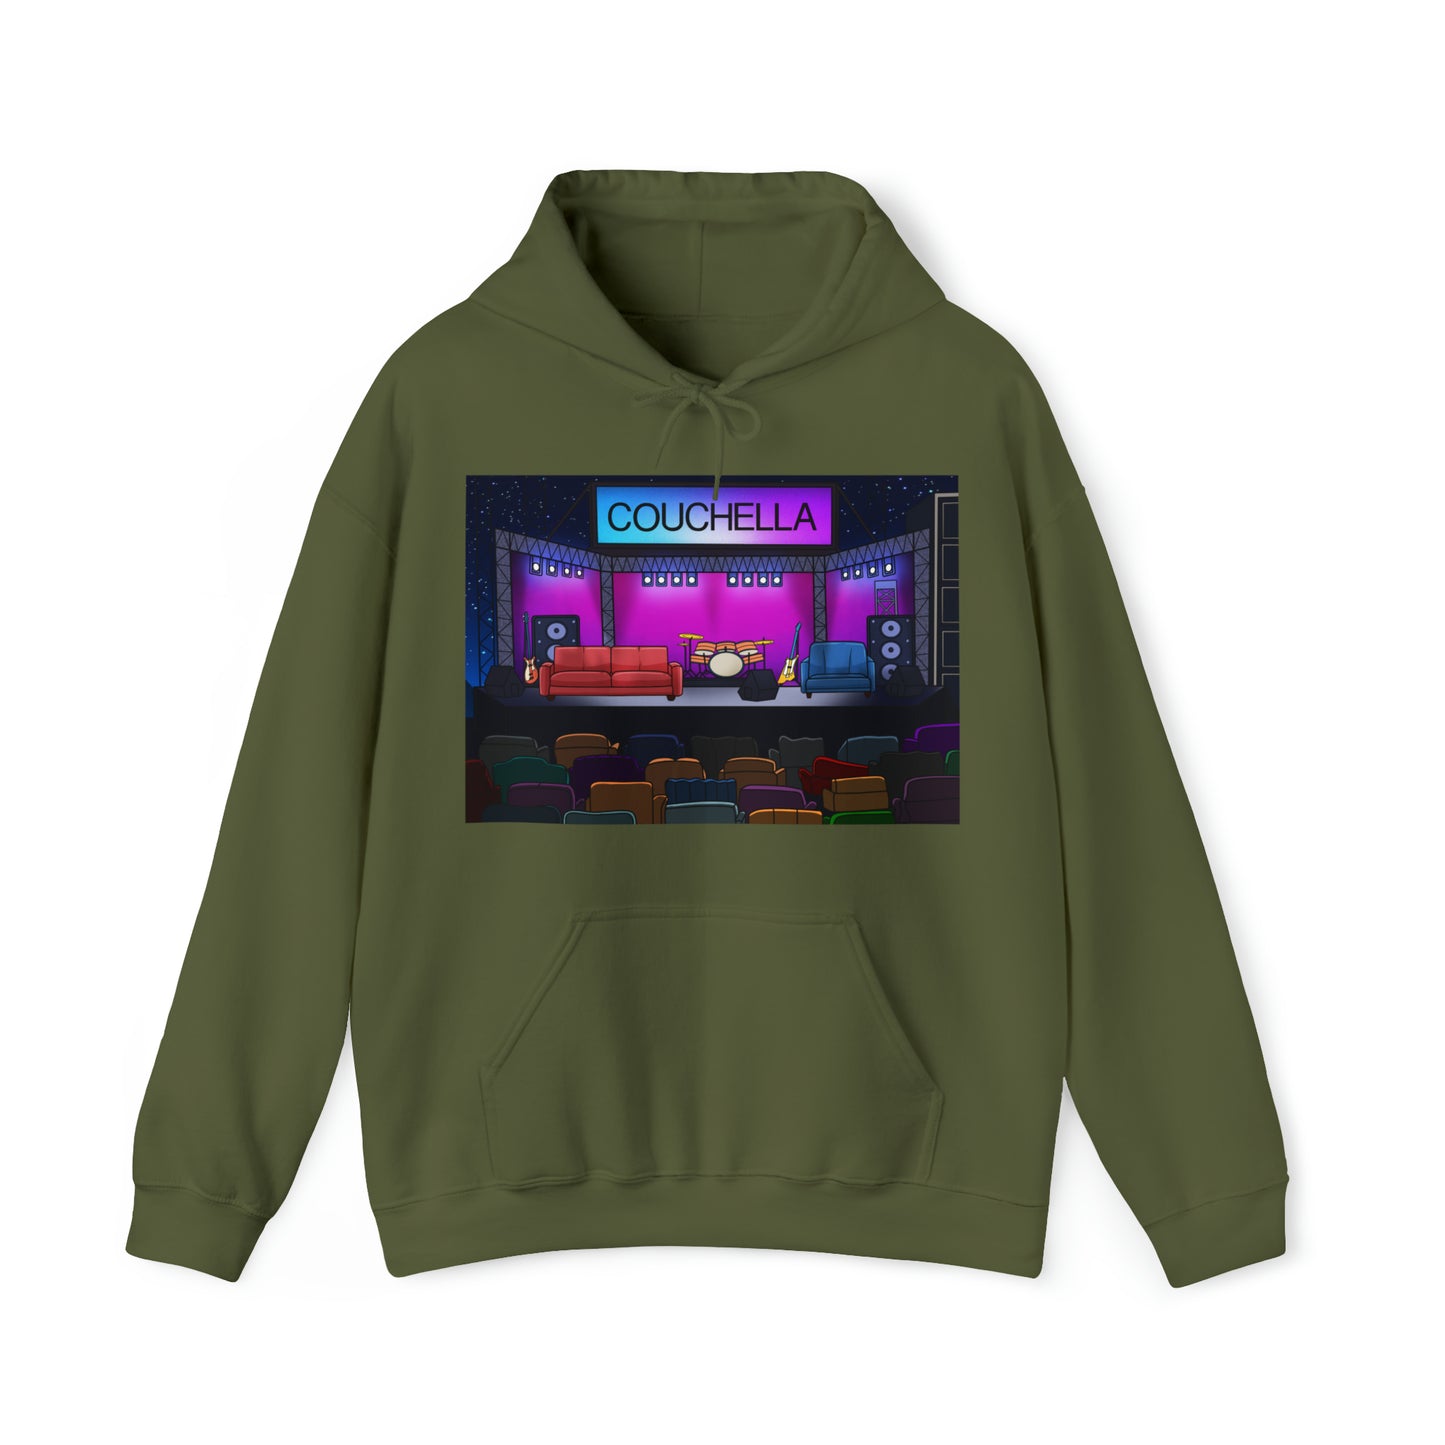 Custom Parody Hooded Sweatshirt, Couchella design